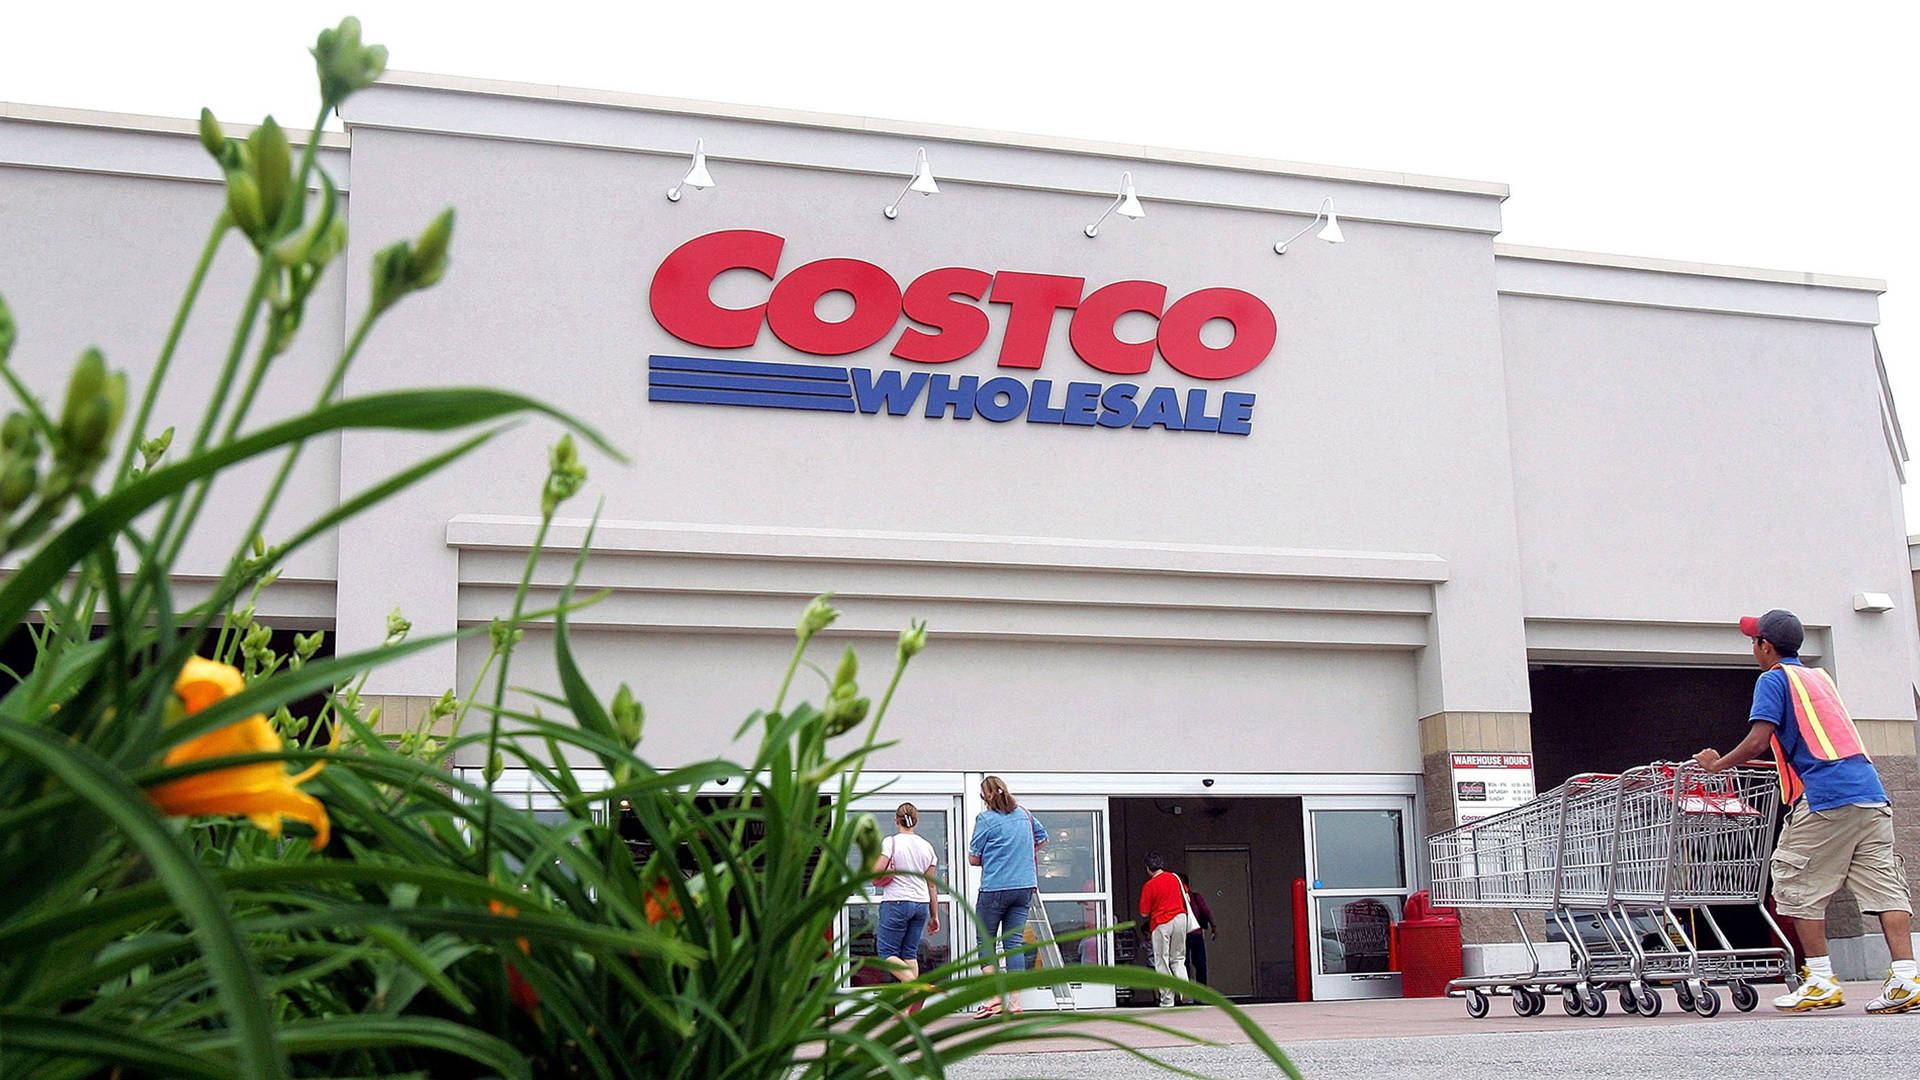 Kundengehen In Costco Wholesale Einkaufen. Wallpaper